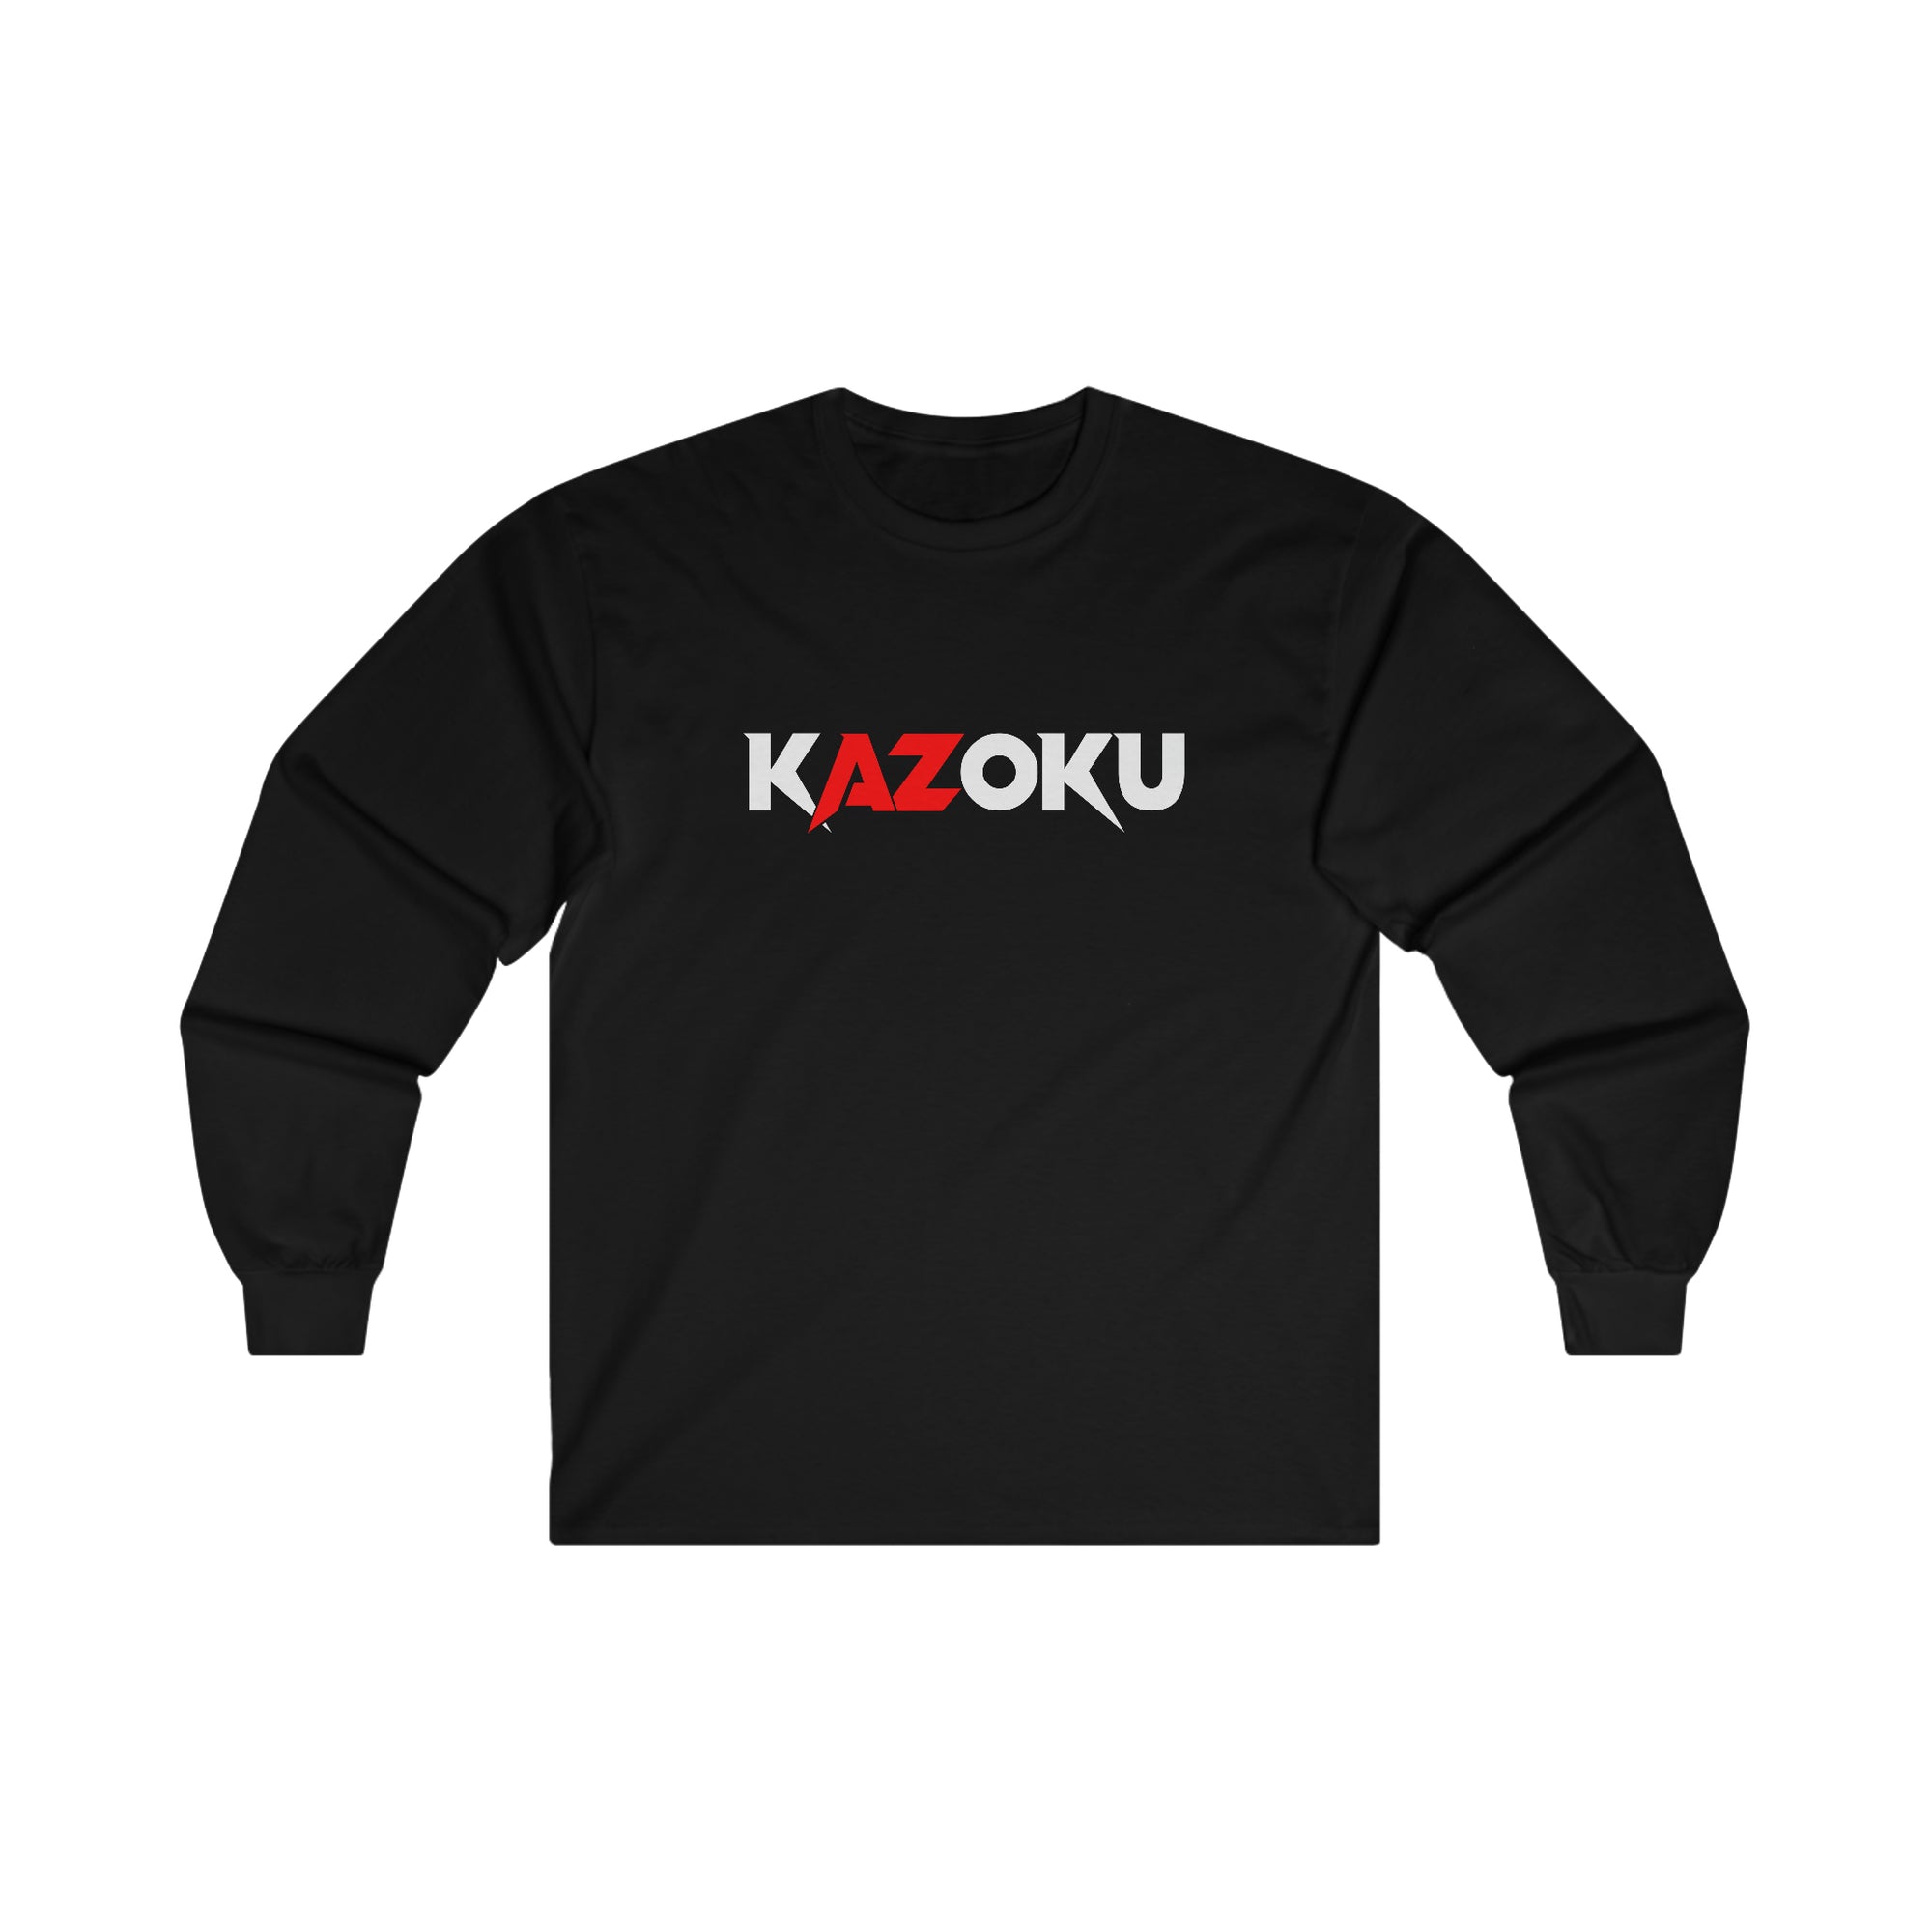 KAZOKU Long Sleeve Tee Red - Design 2